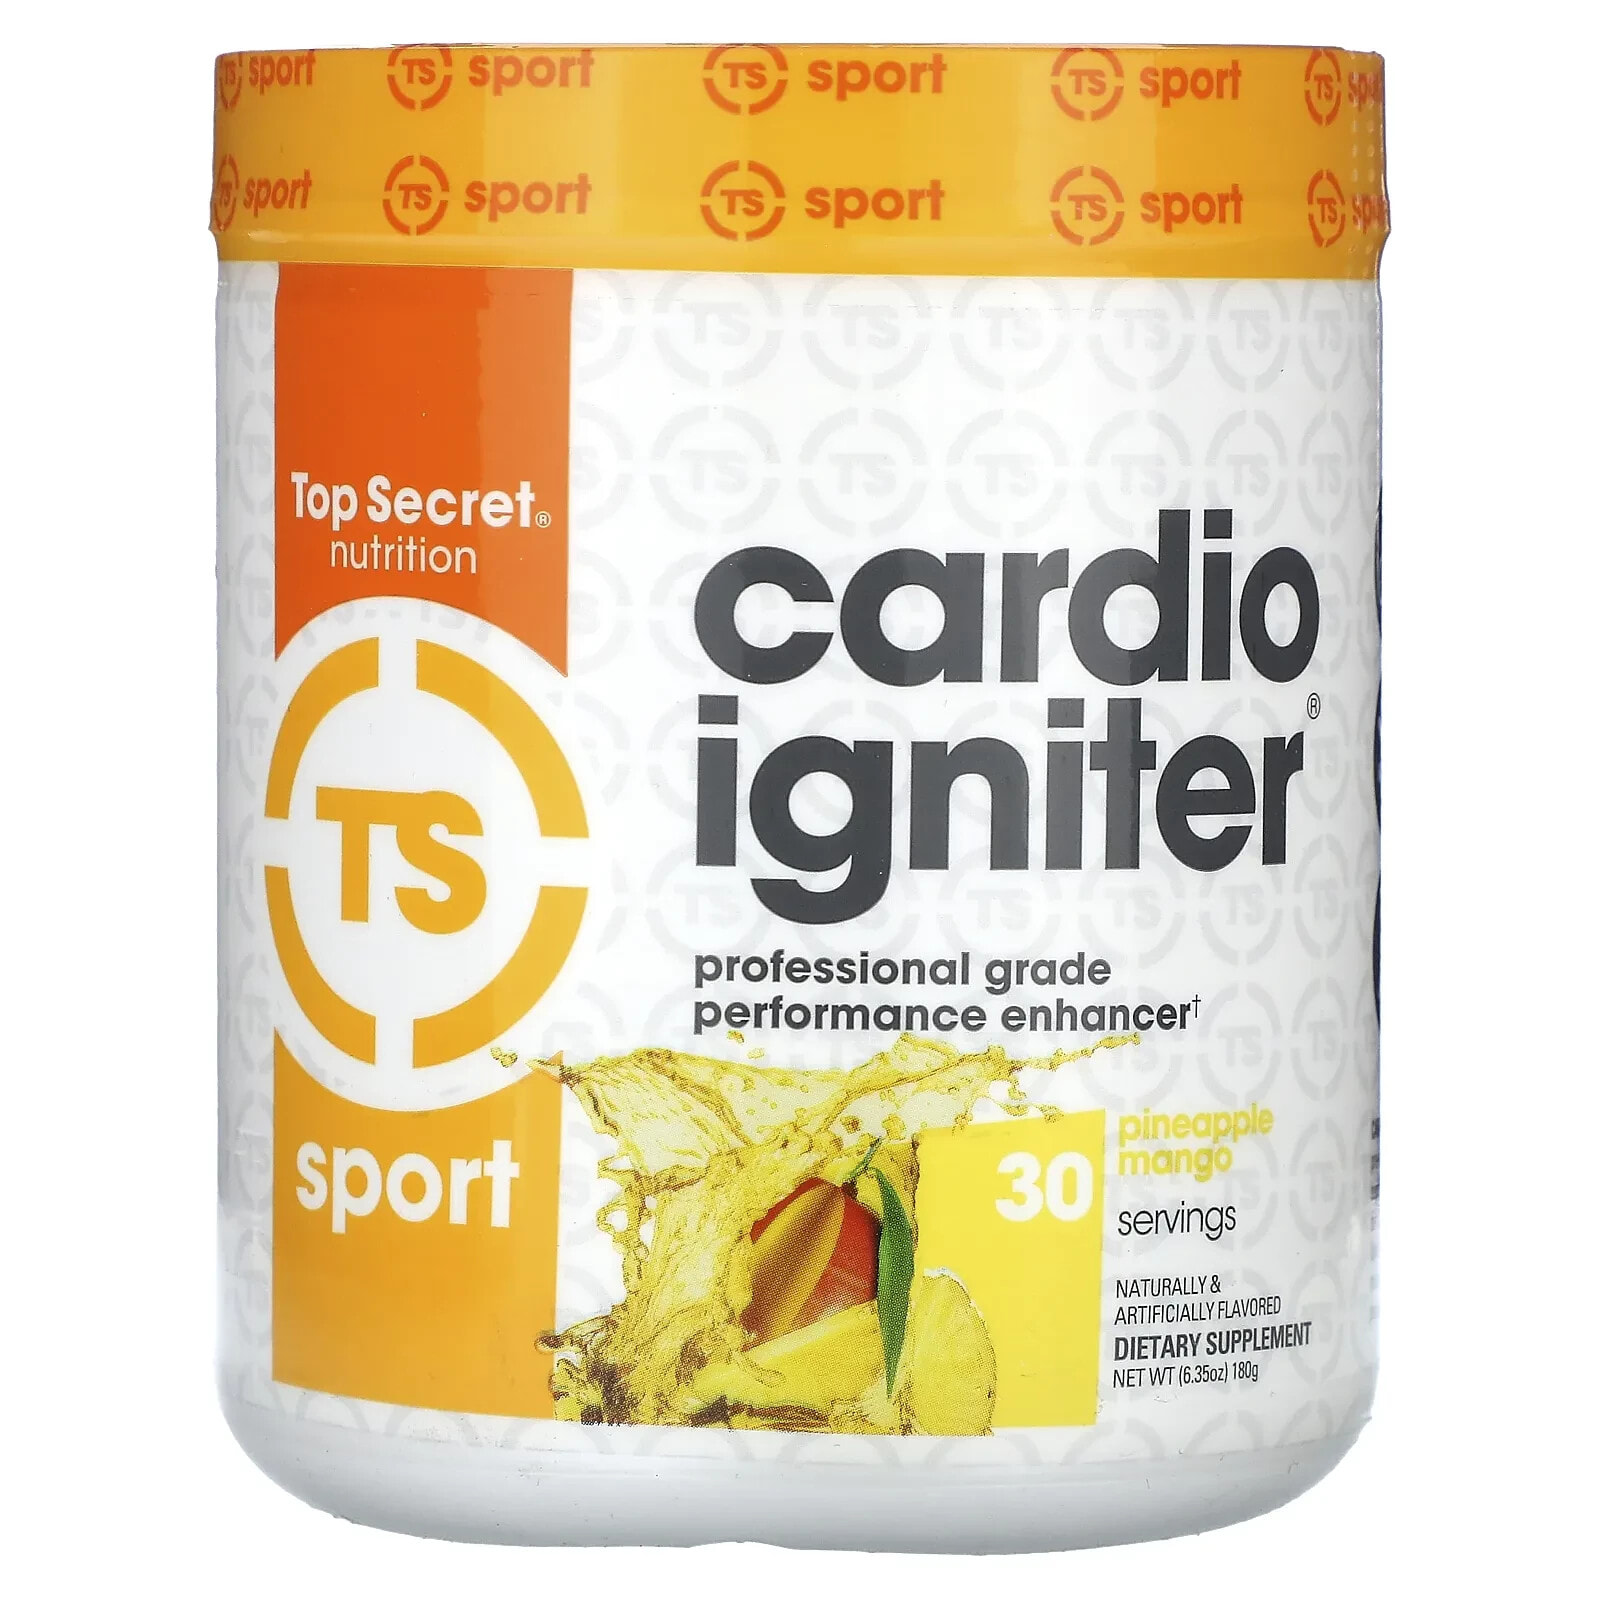 Top Secret Nutrition, LLC, Sport, Cardio Igniter, Professional Grade Performance Enhancer, Pineapple Mango, 6.35 oz (180 g)